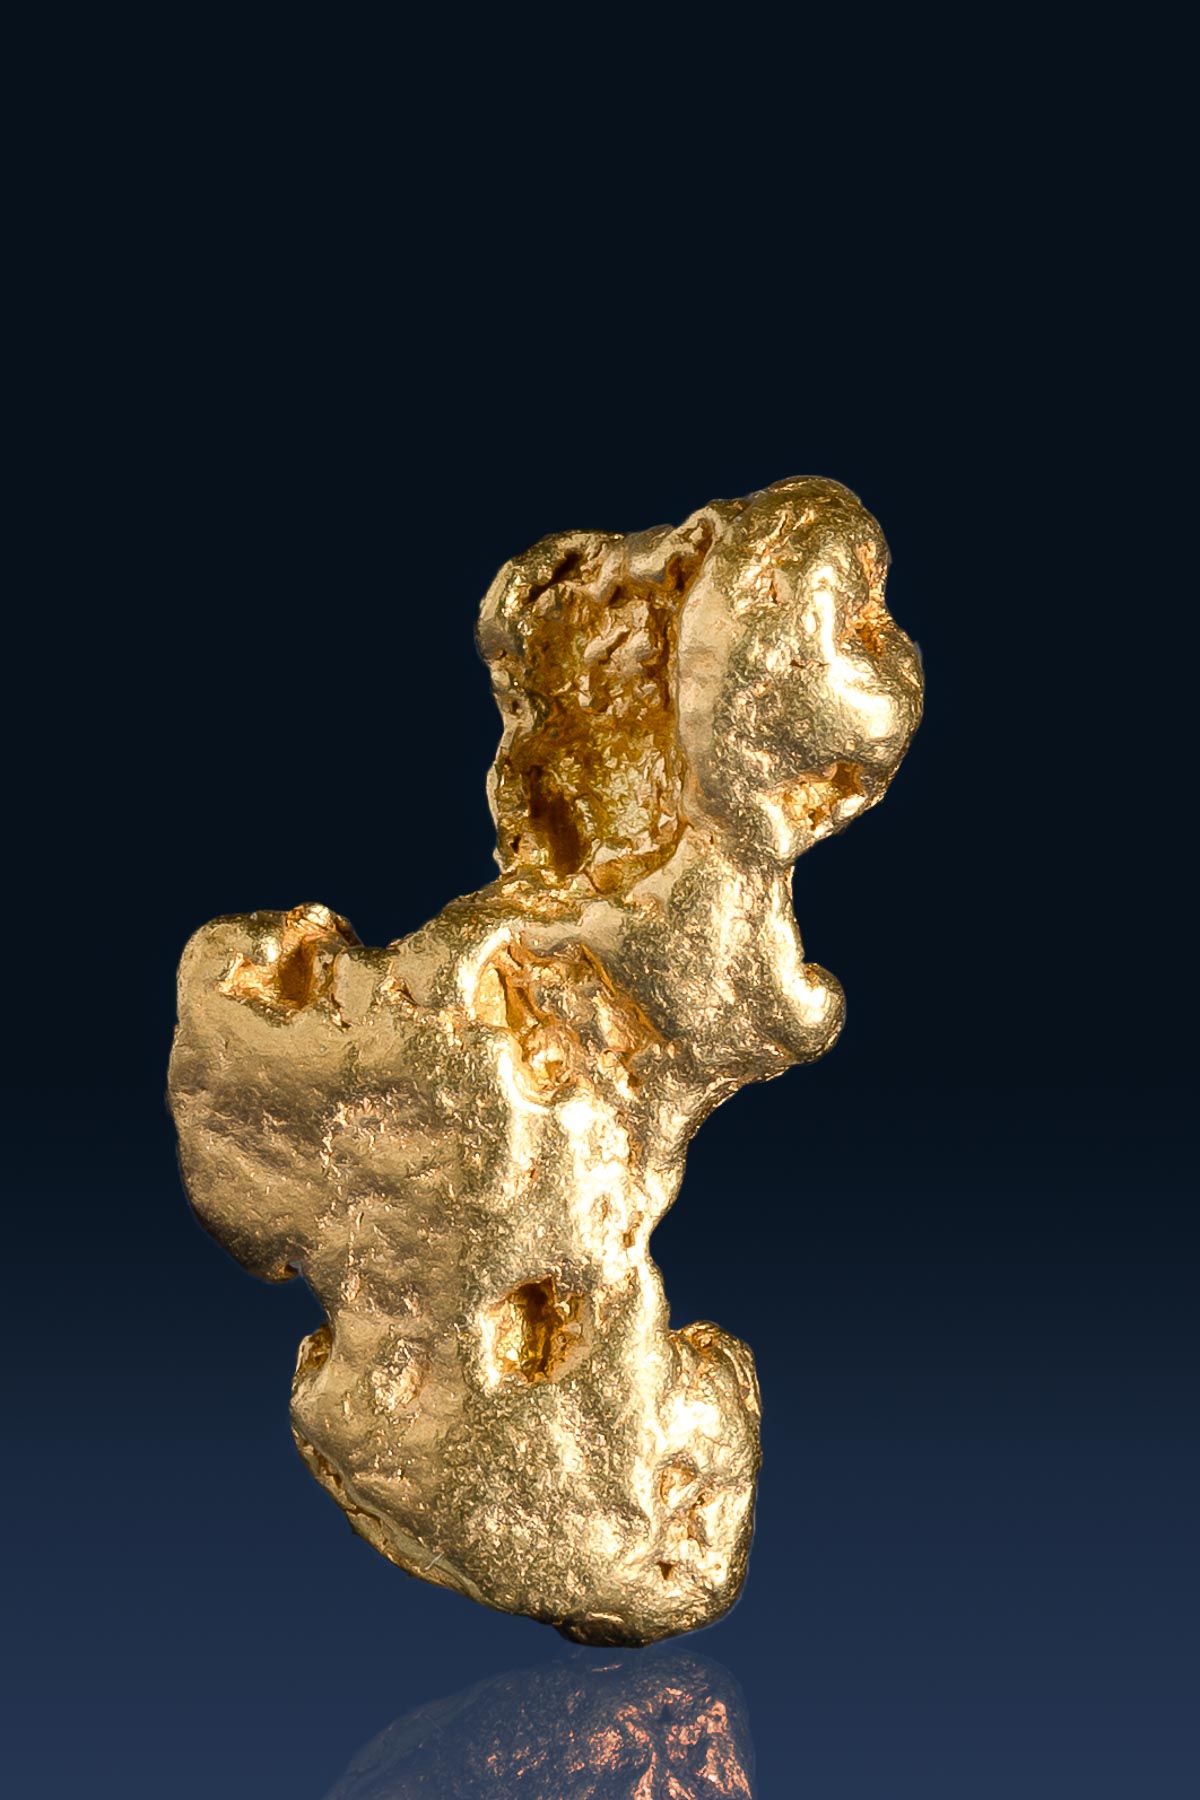 Unique Shaped Natural Yukon Gold Nugget - 8.82 grams